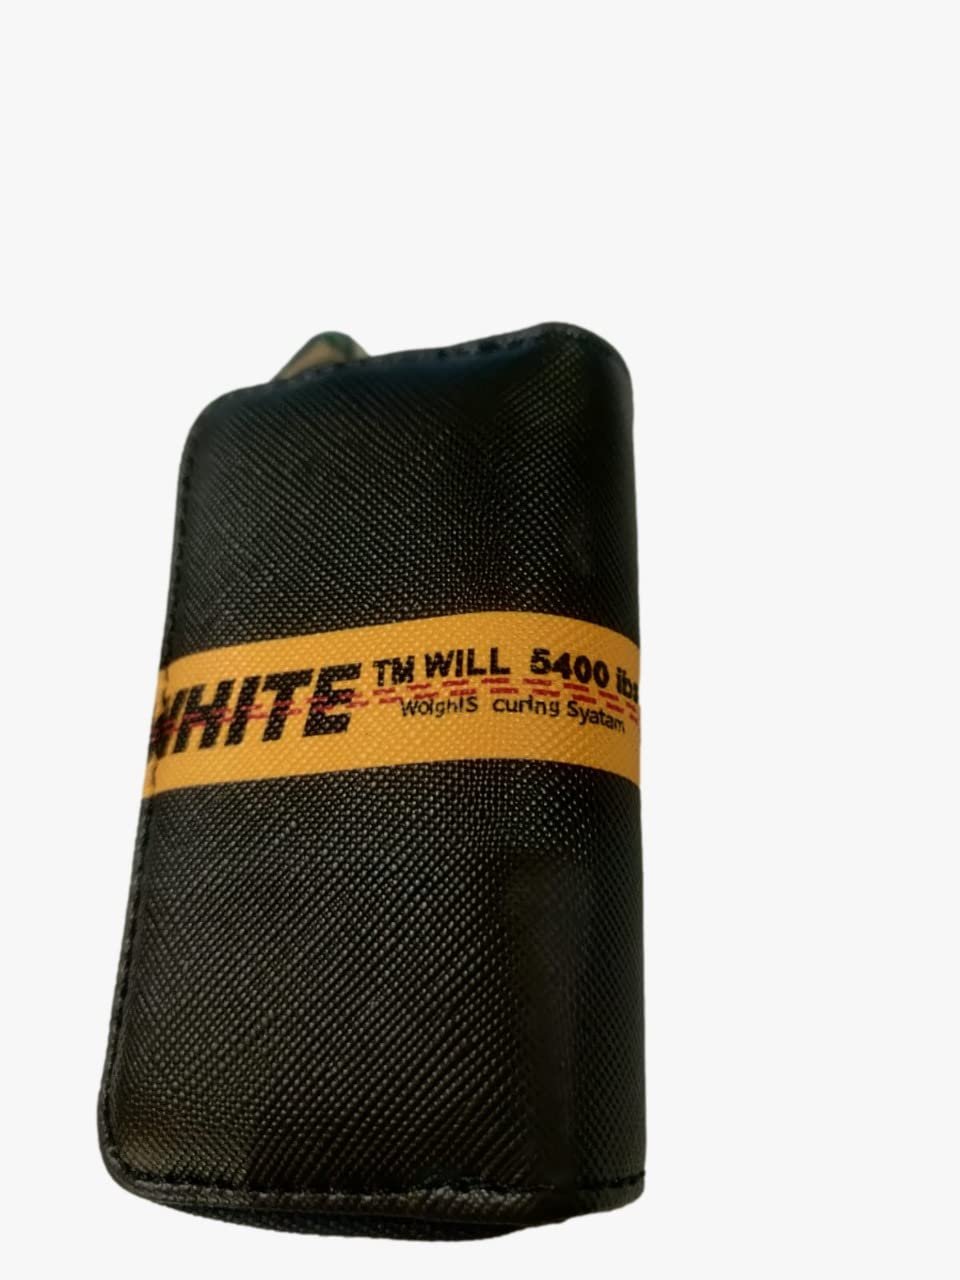 Car Key Chain Cover Holder Zipper Case Remote Wallet Bag Off white Design Image 